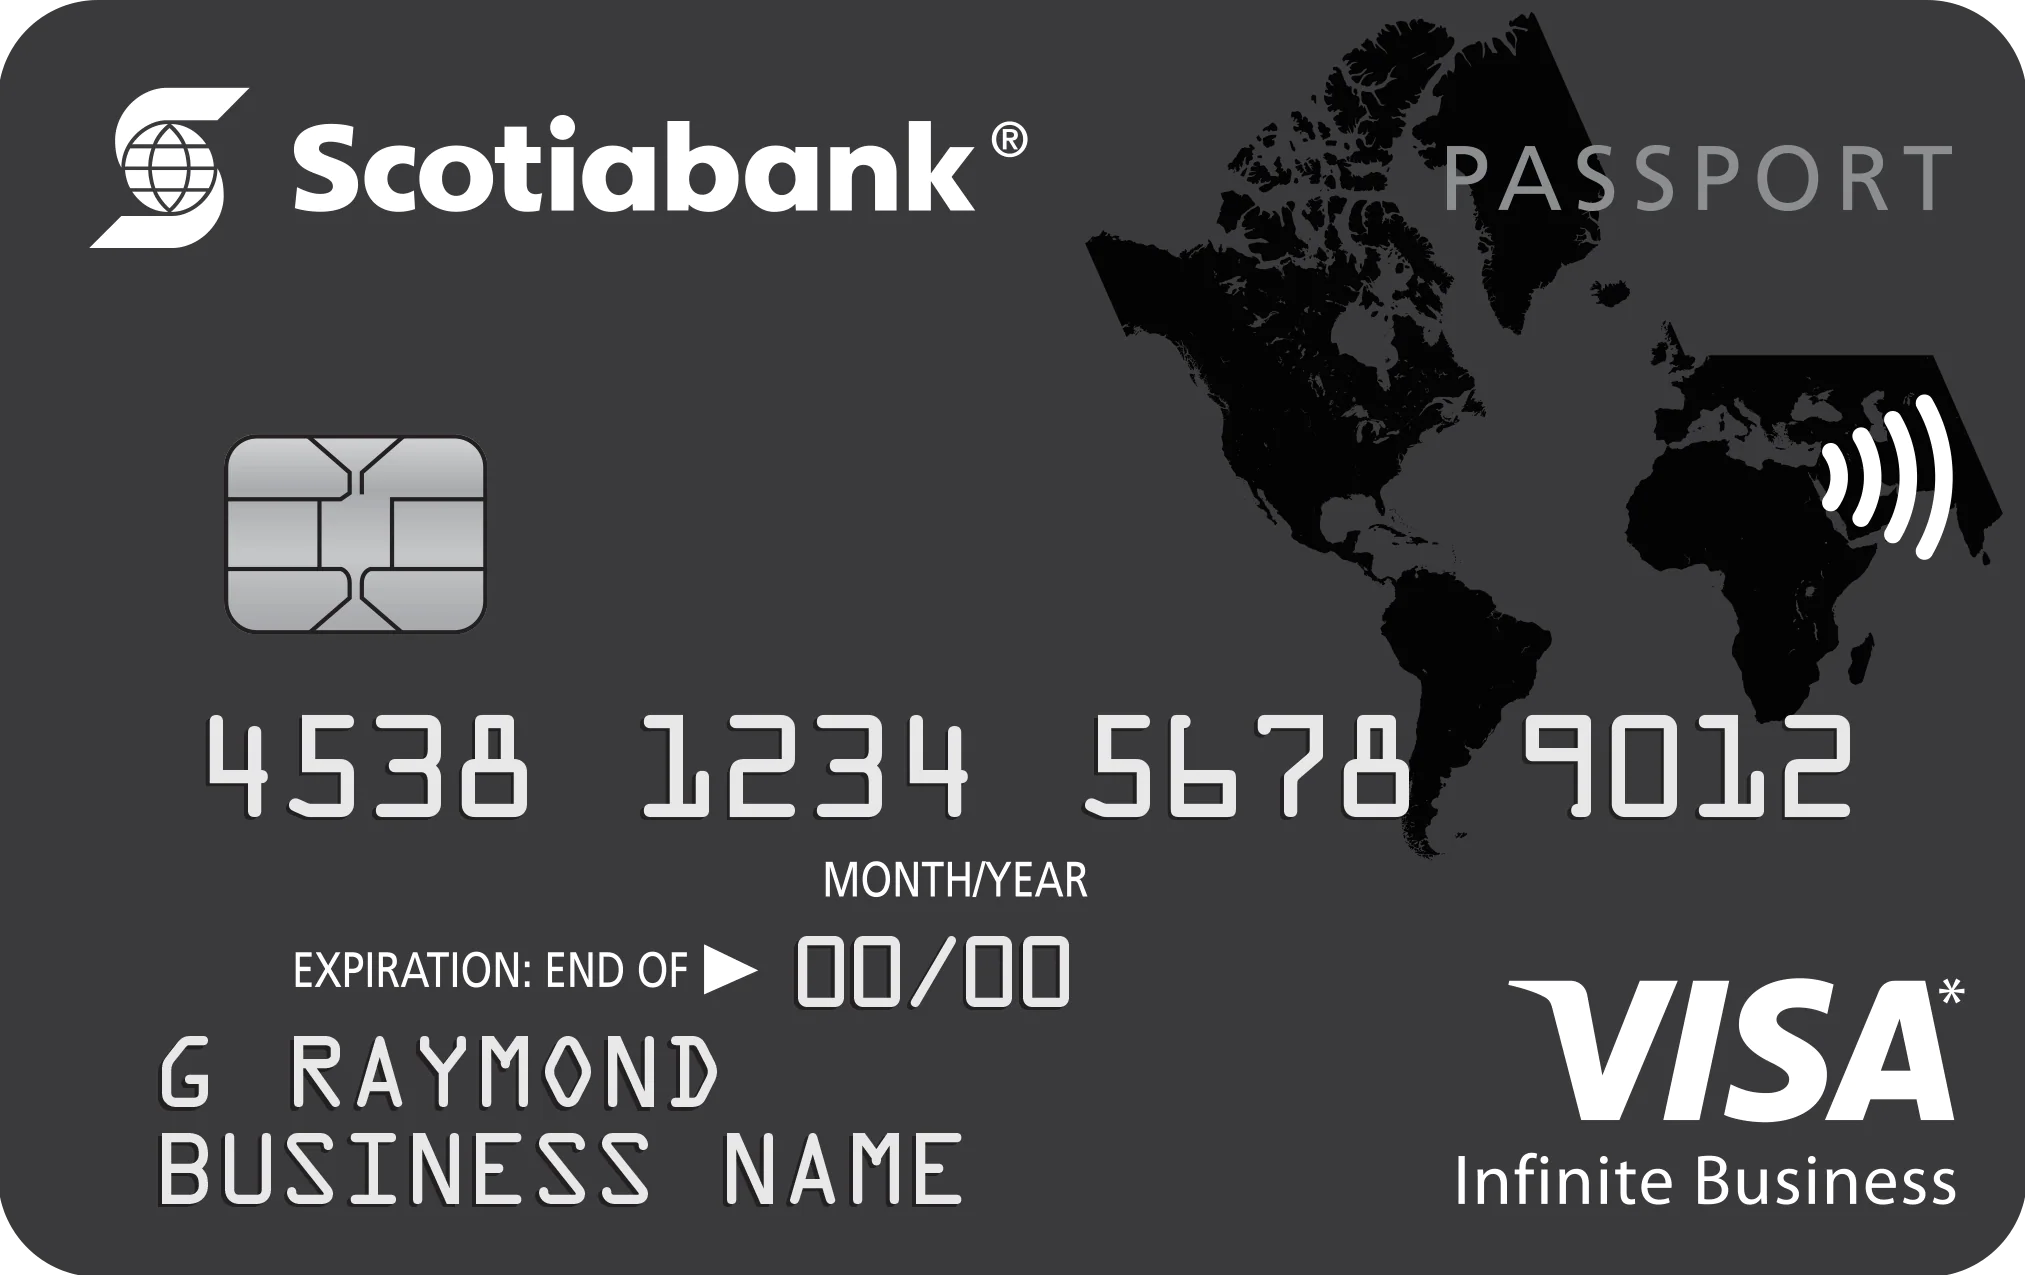 Scotiabank Passport Visa Infinite Business Card.